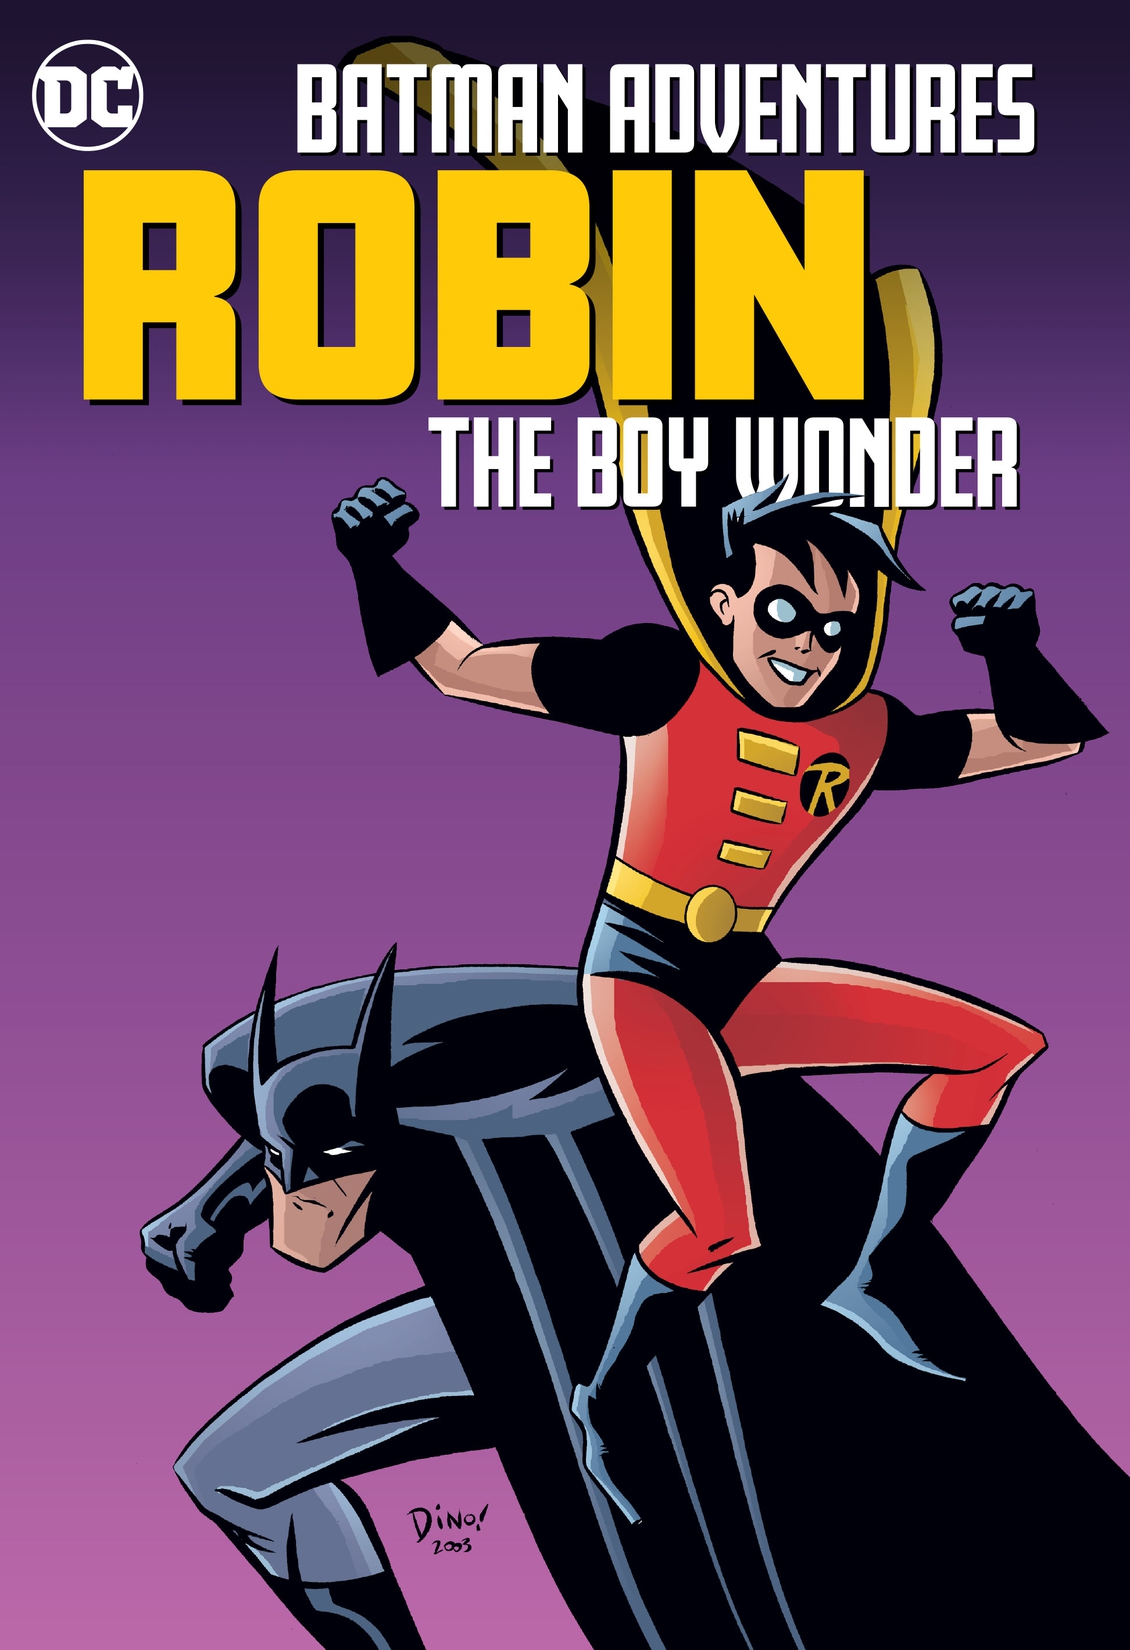 Batman Adventures: Robin, The Boy Wonder preview images